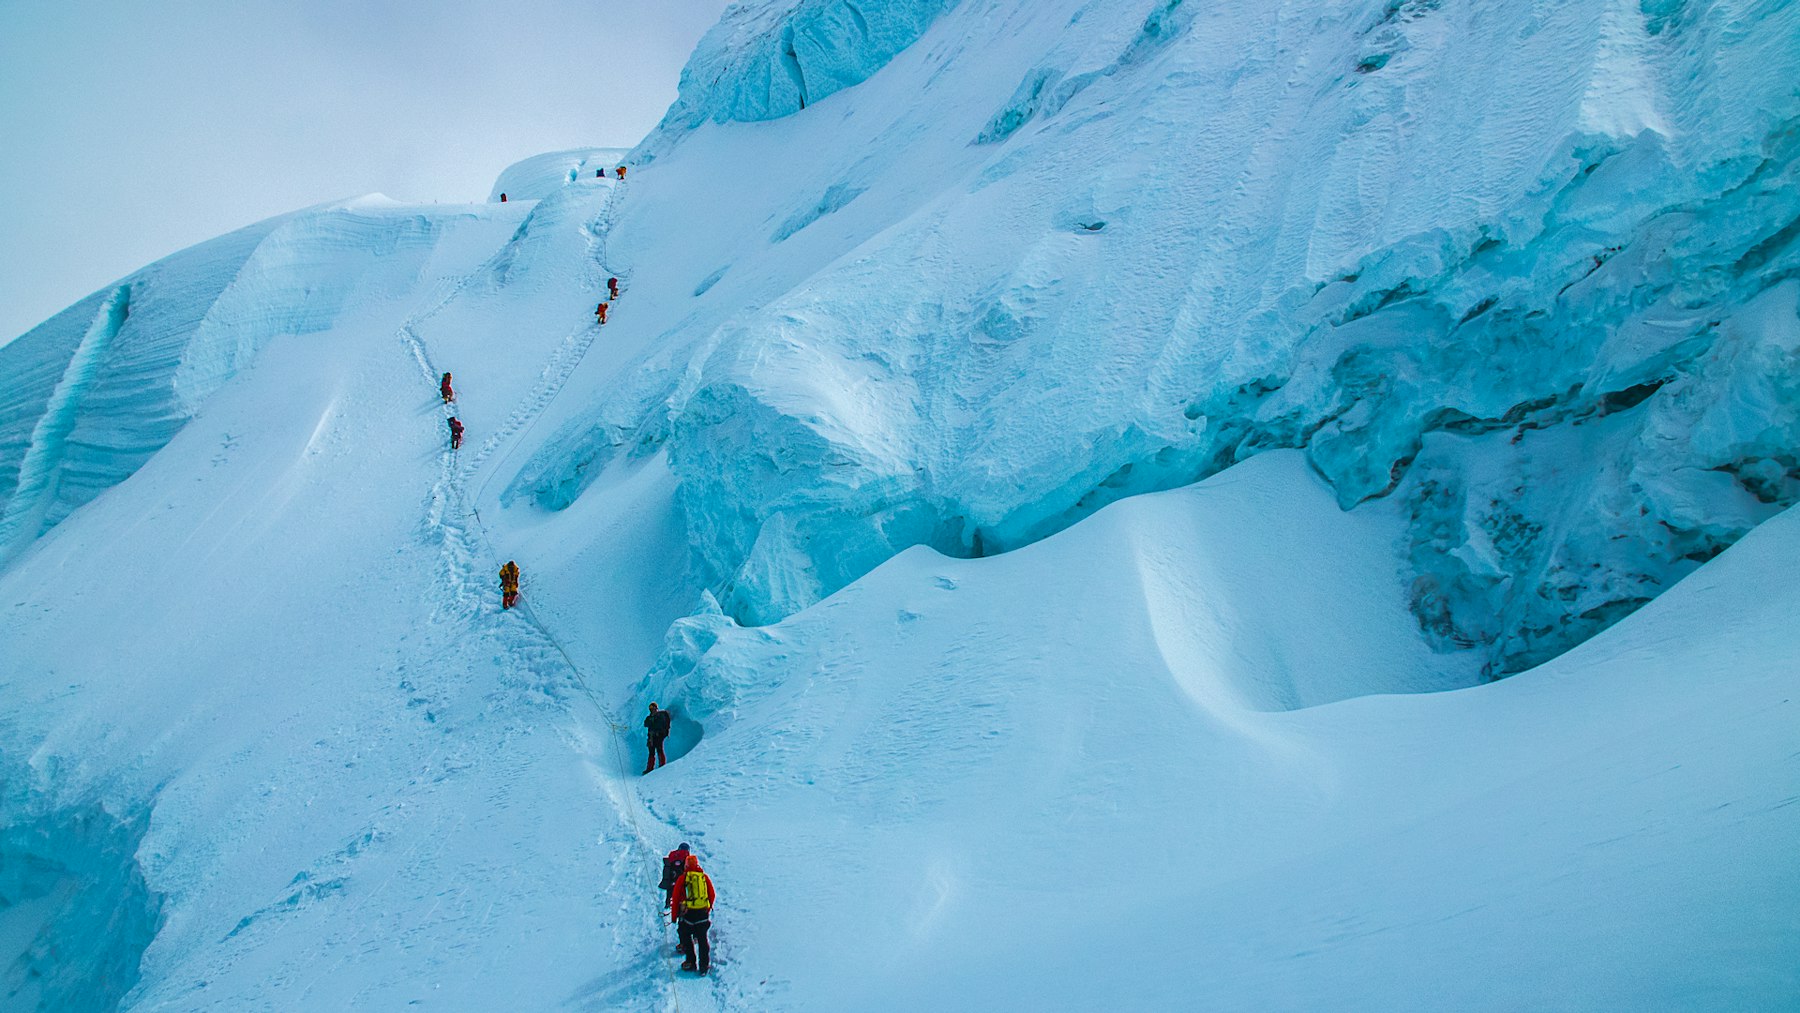 Climbing Mount Everest, a scene from Meltdown on Top of the World. AKDN / Shanta Nepali